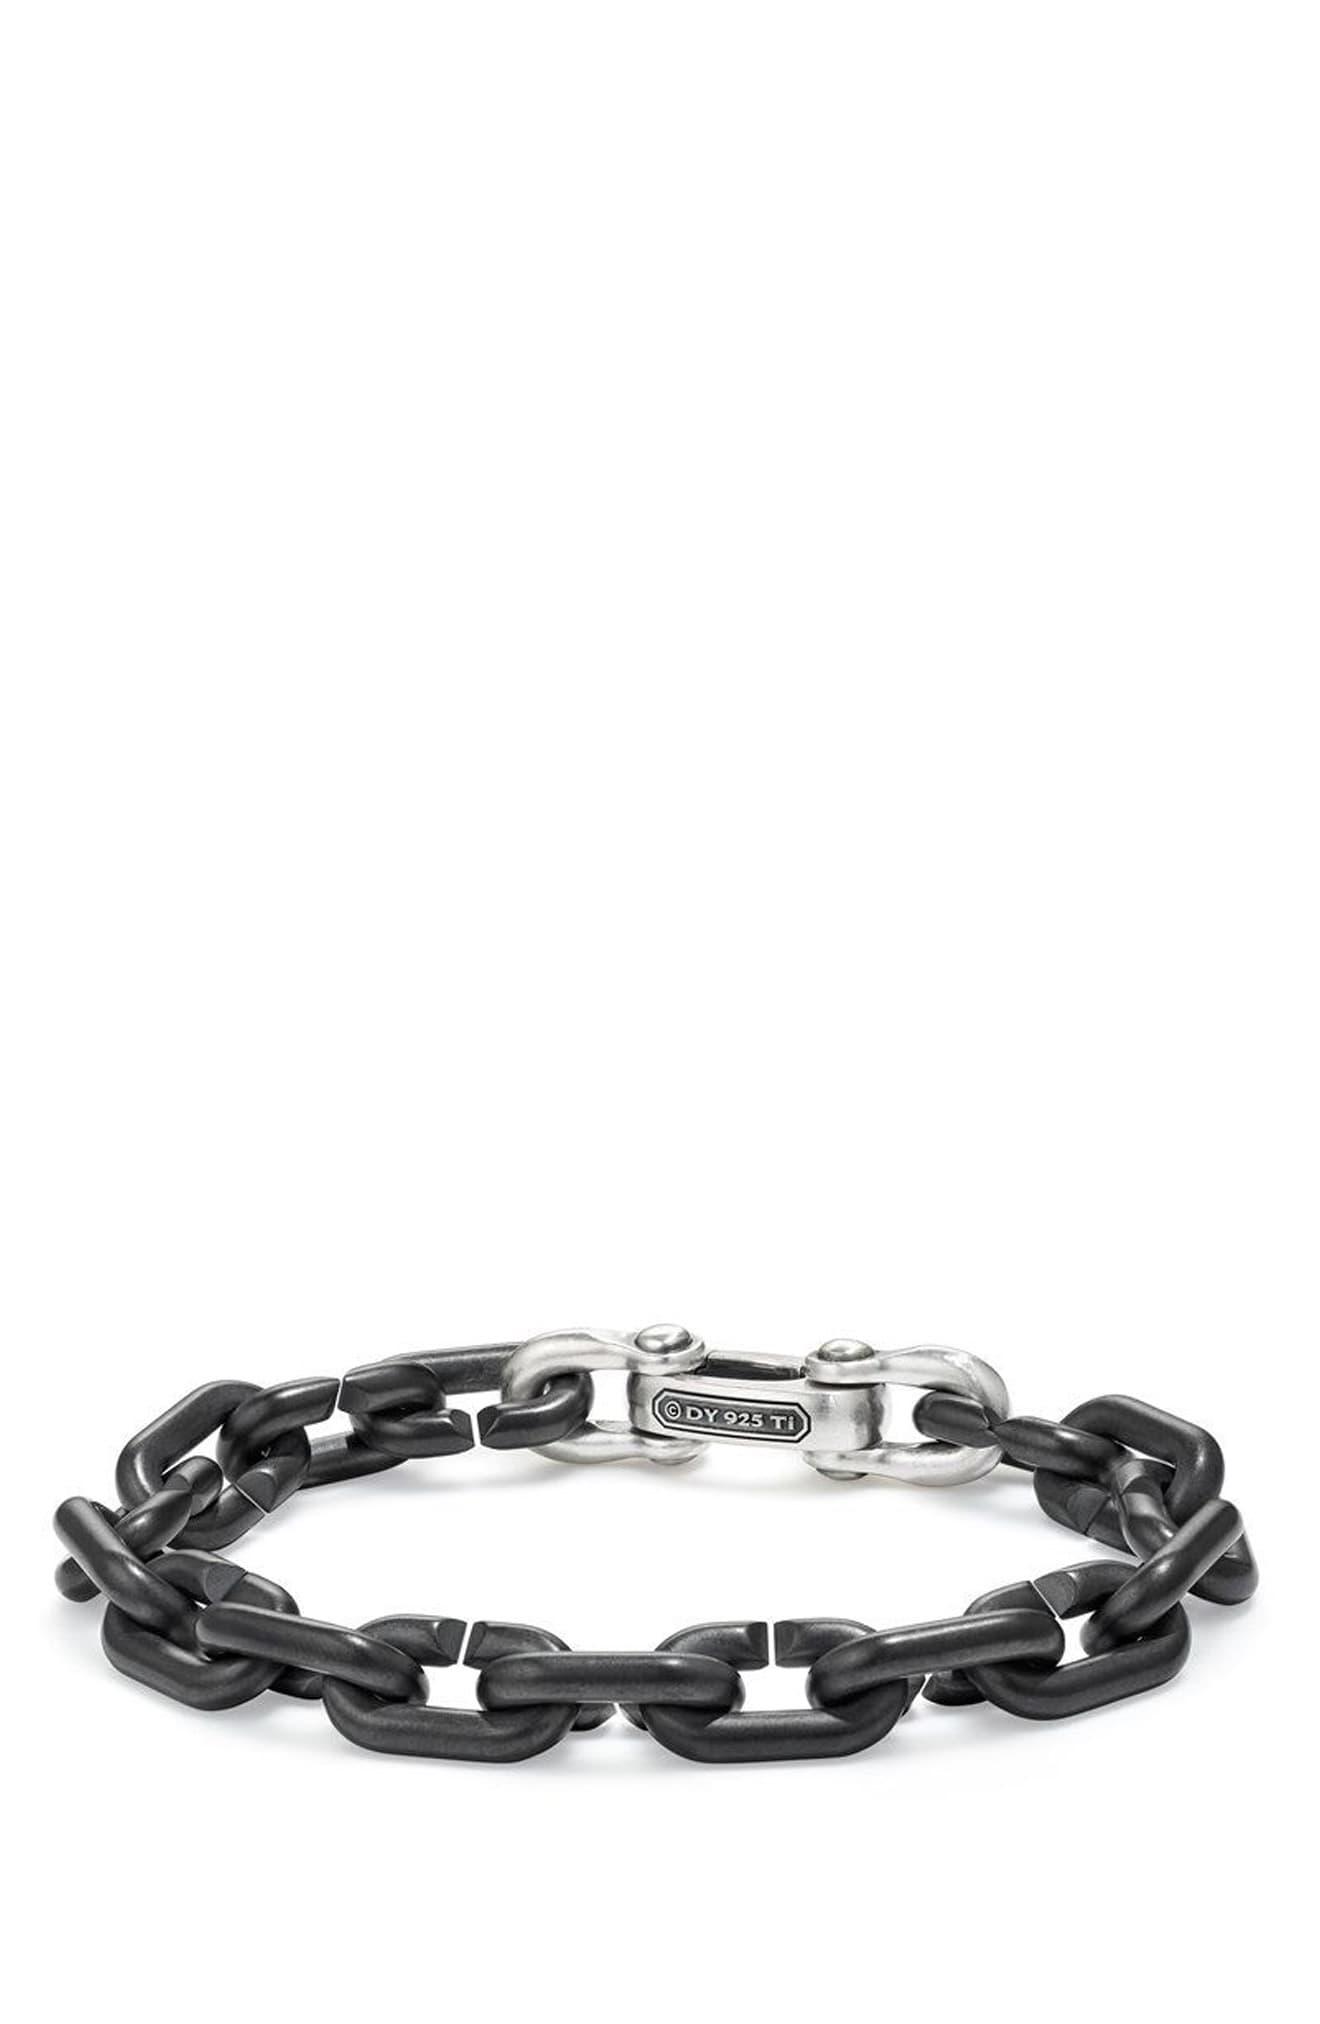 David Yurman Bold Chain Links Bracelet in Titanium (Black) for Men - Lyst